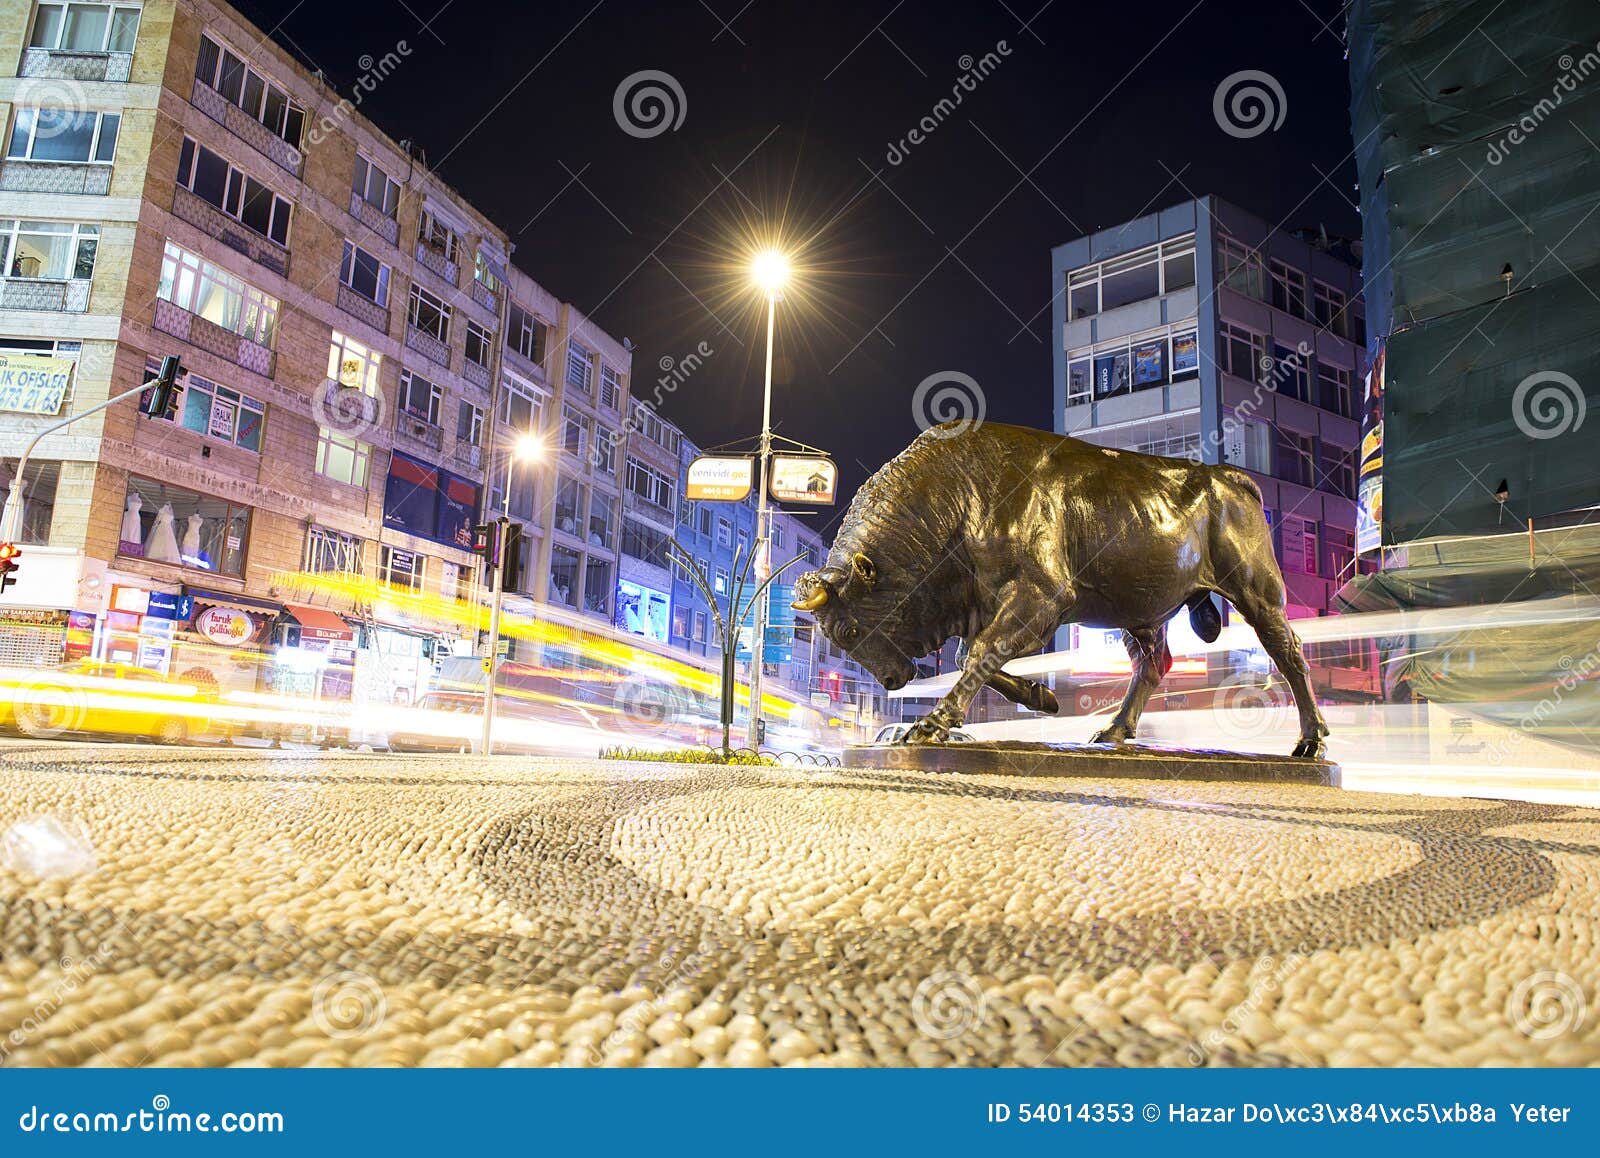 istanbul,kadikoy: bull statue at the kadikoy square.